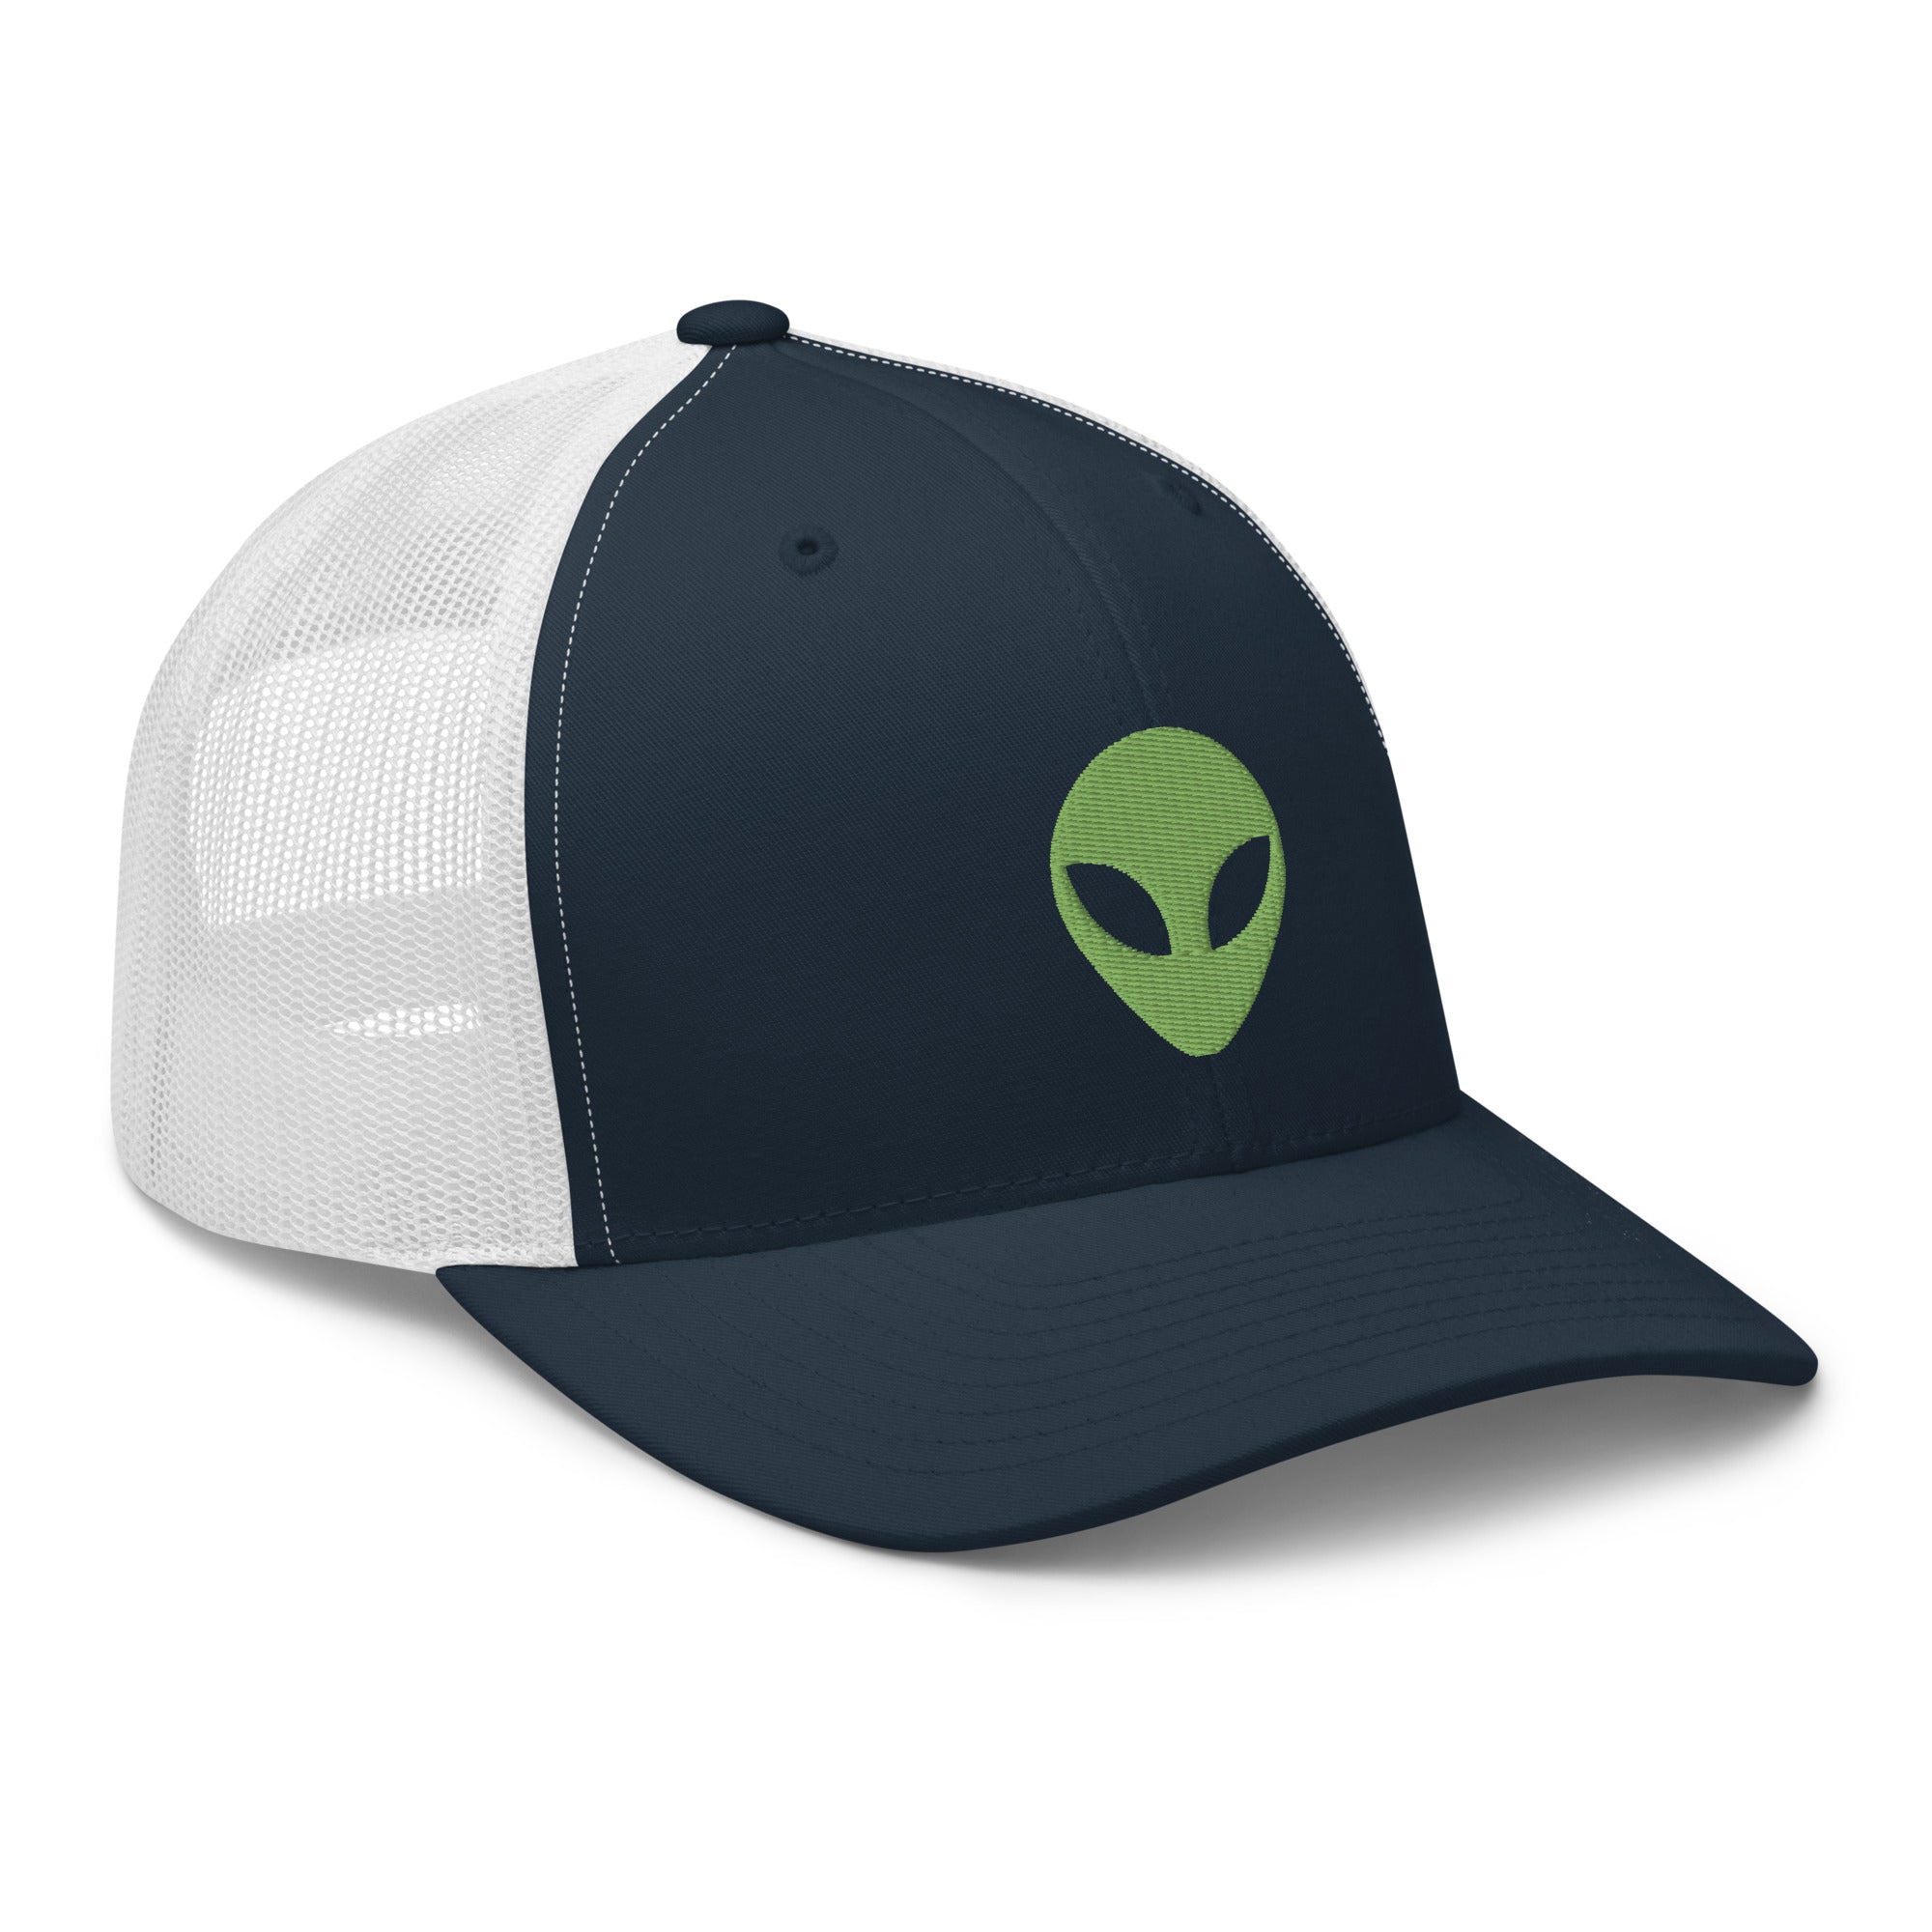 Alien Face Little Green Men Embroidered Retro Trucker Cap Snapback Hat